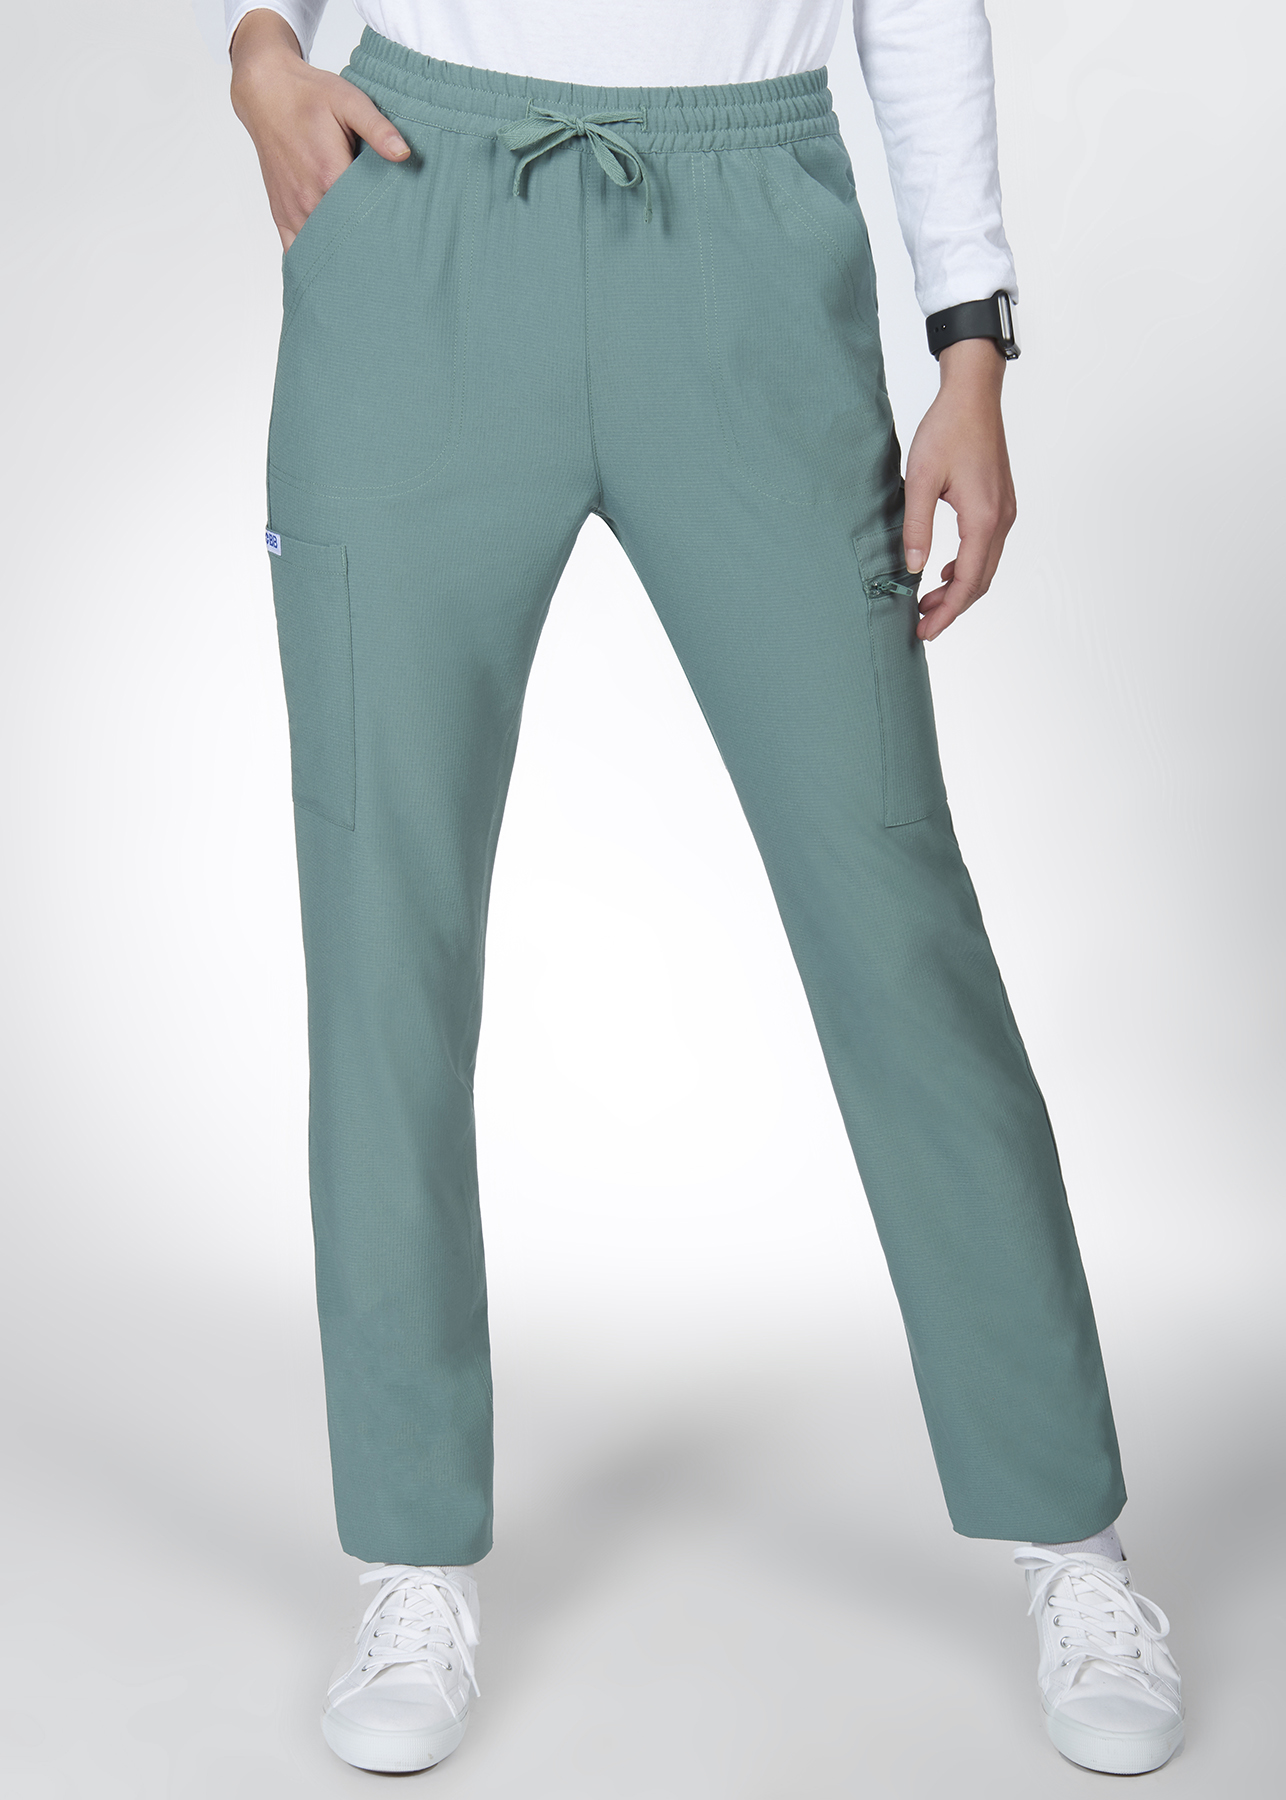 Unisex Chef Pants (STYLE #2032) - Wholesale Scrub Sets